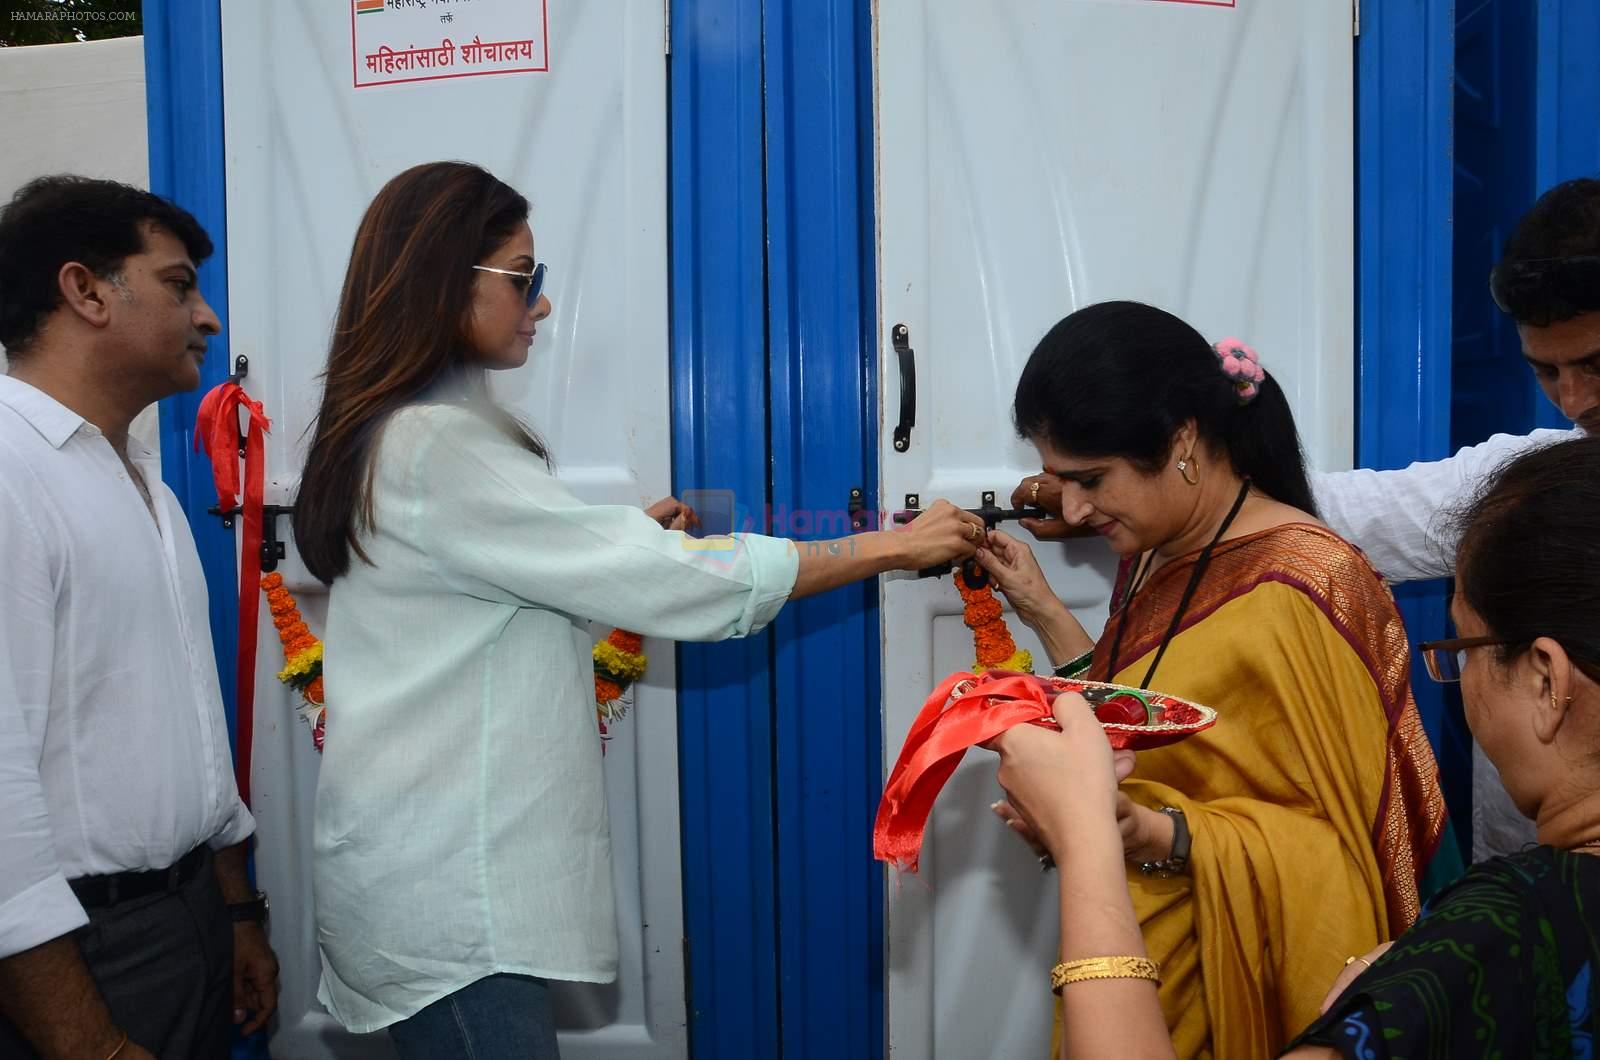 Sridevi at sulabh public toilet launch in Mumbai  on 8th Aug 2015